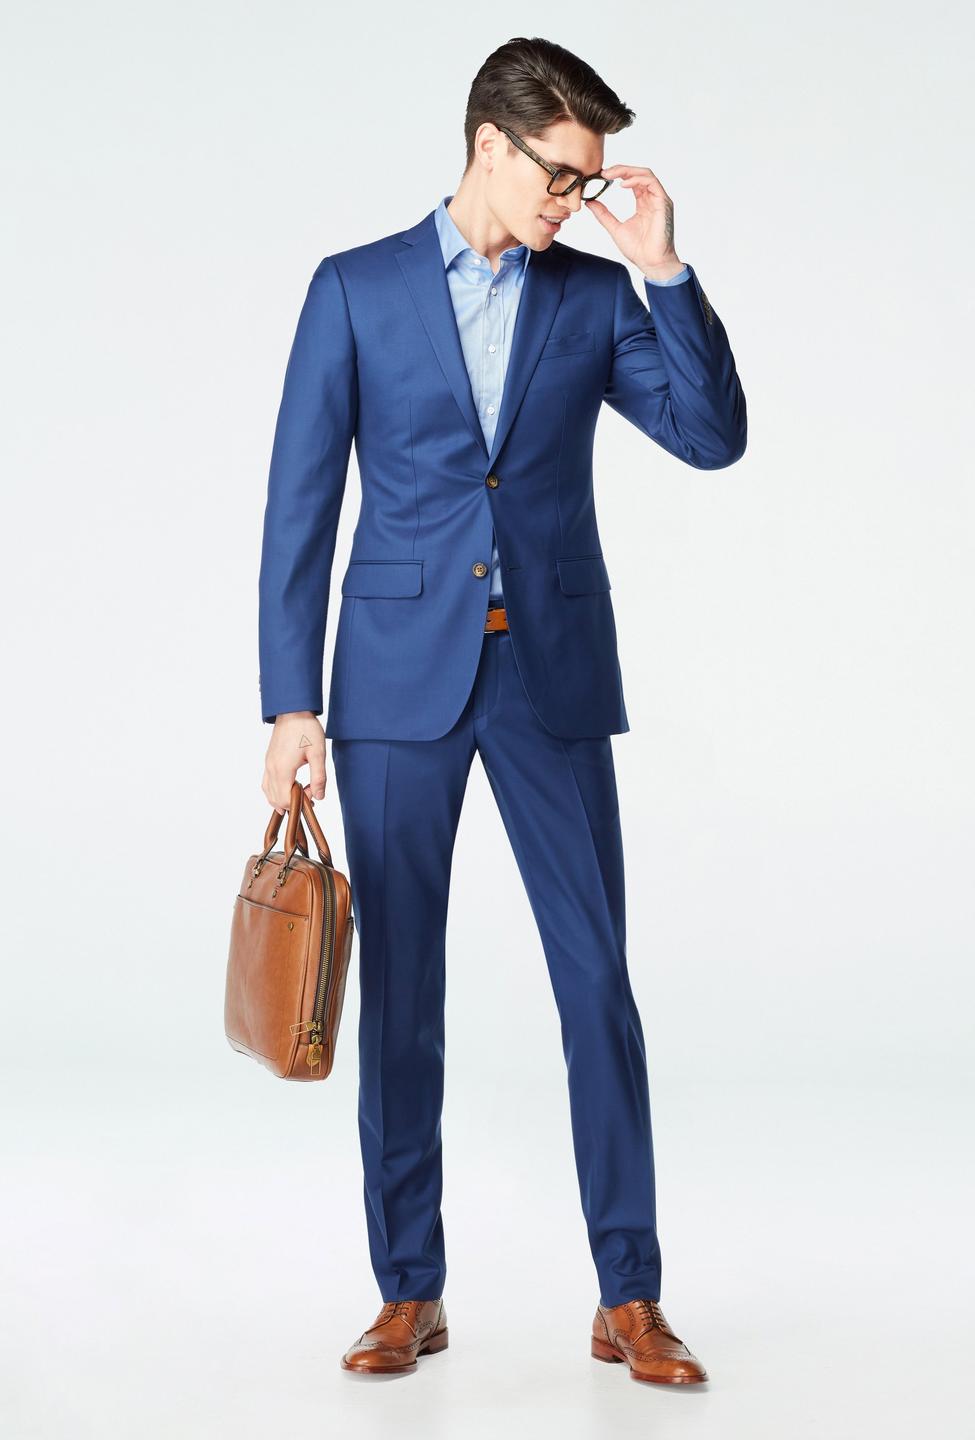 Blue blazer - Highbridge Solid Design from Luxury Indochino Collection